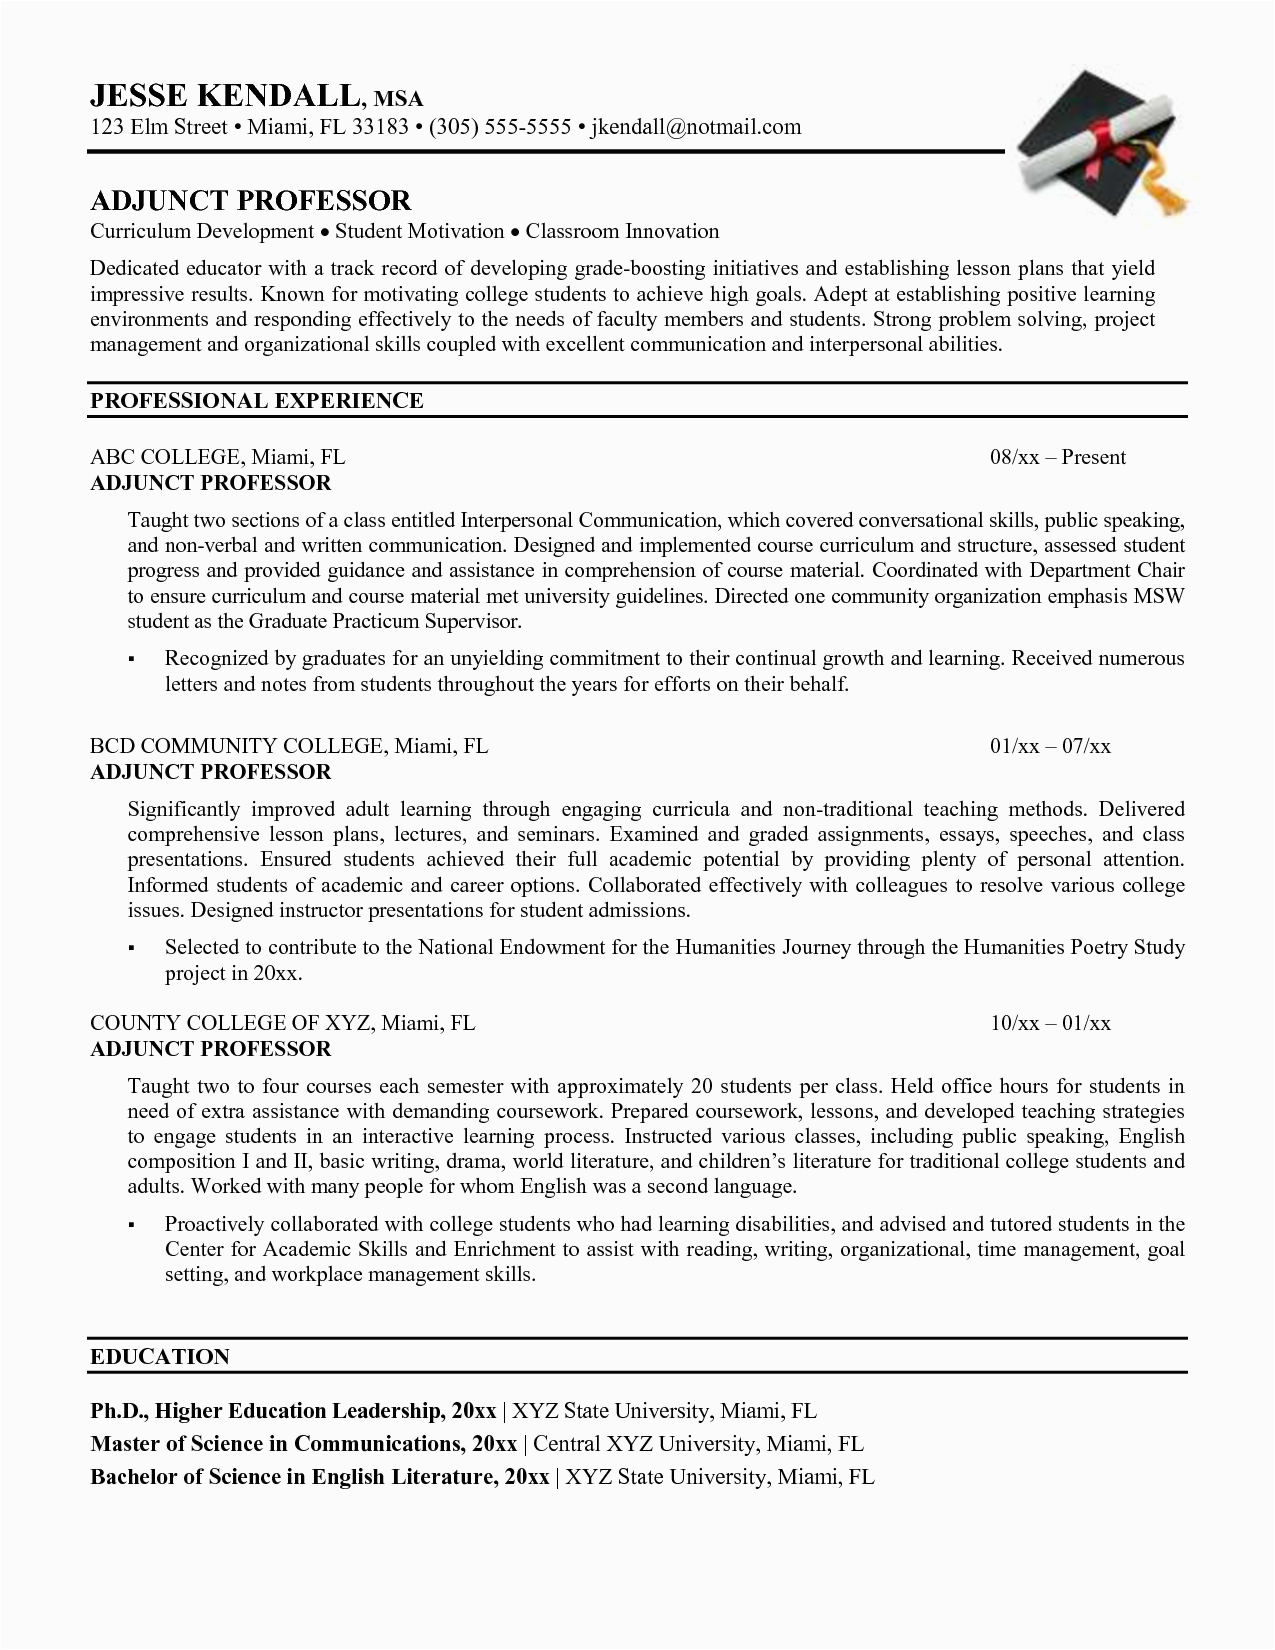 Sample Resume for Community College Teaching Position Sample Resume for Faculty Position Engineering Adjunct